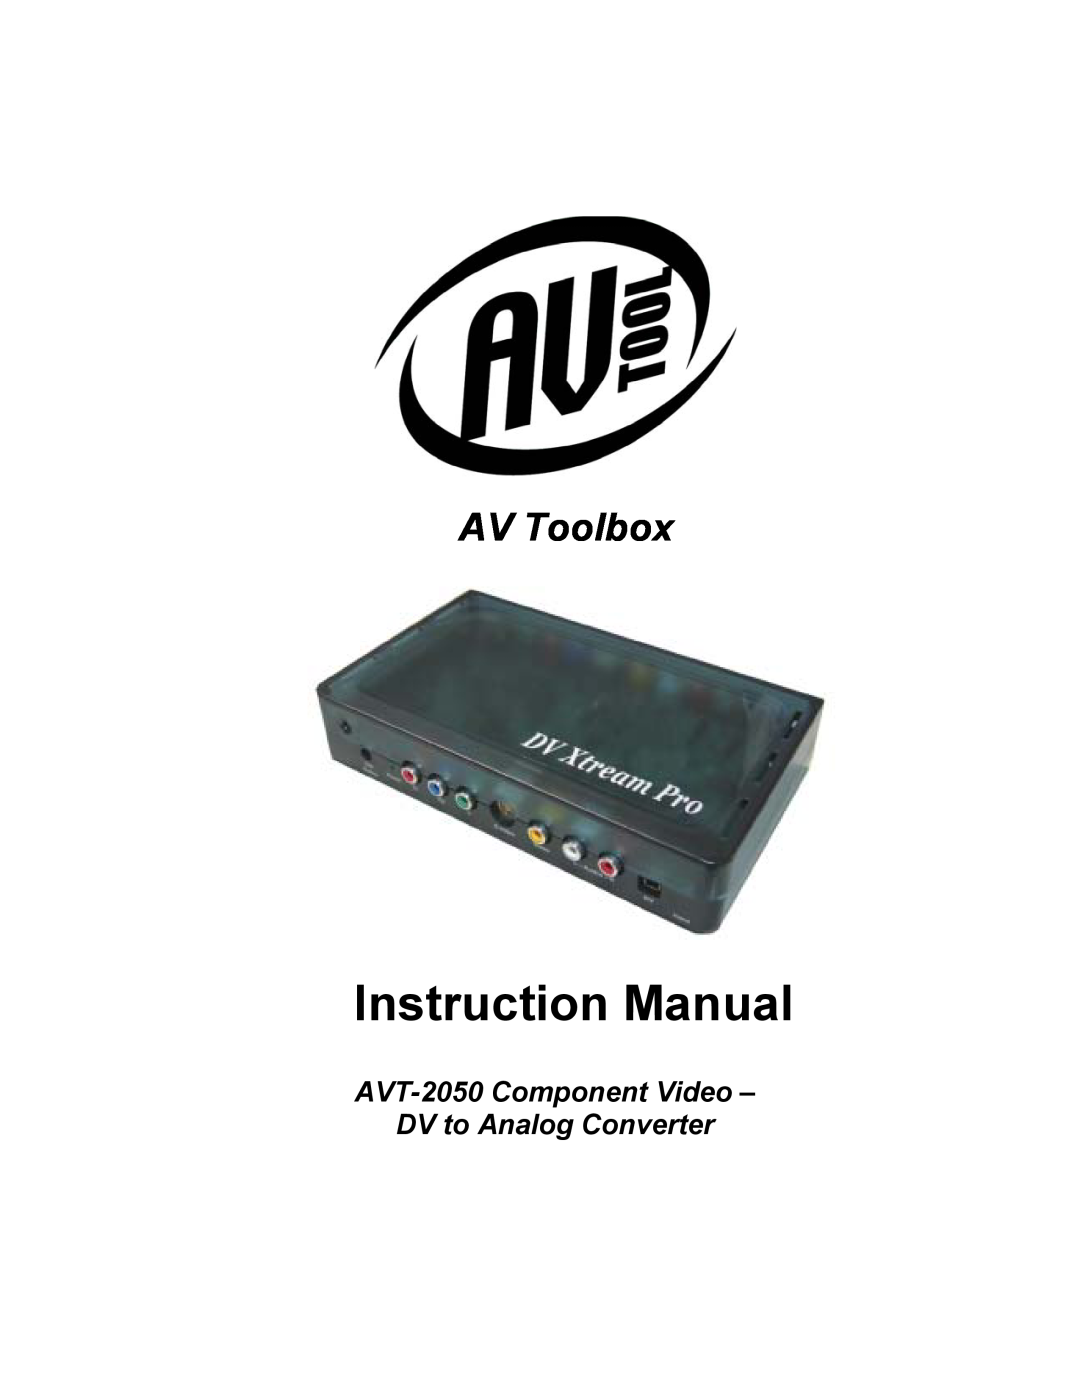 RCA instruction manual Instruction Manual, AV Toolbox, AVT-2050 Component Video DV to Analog Converter 